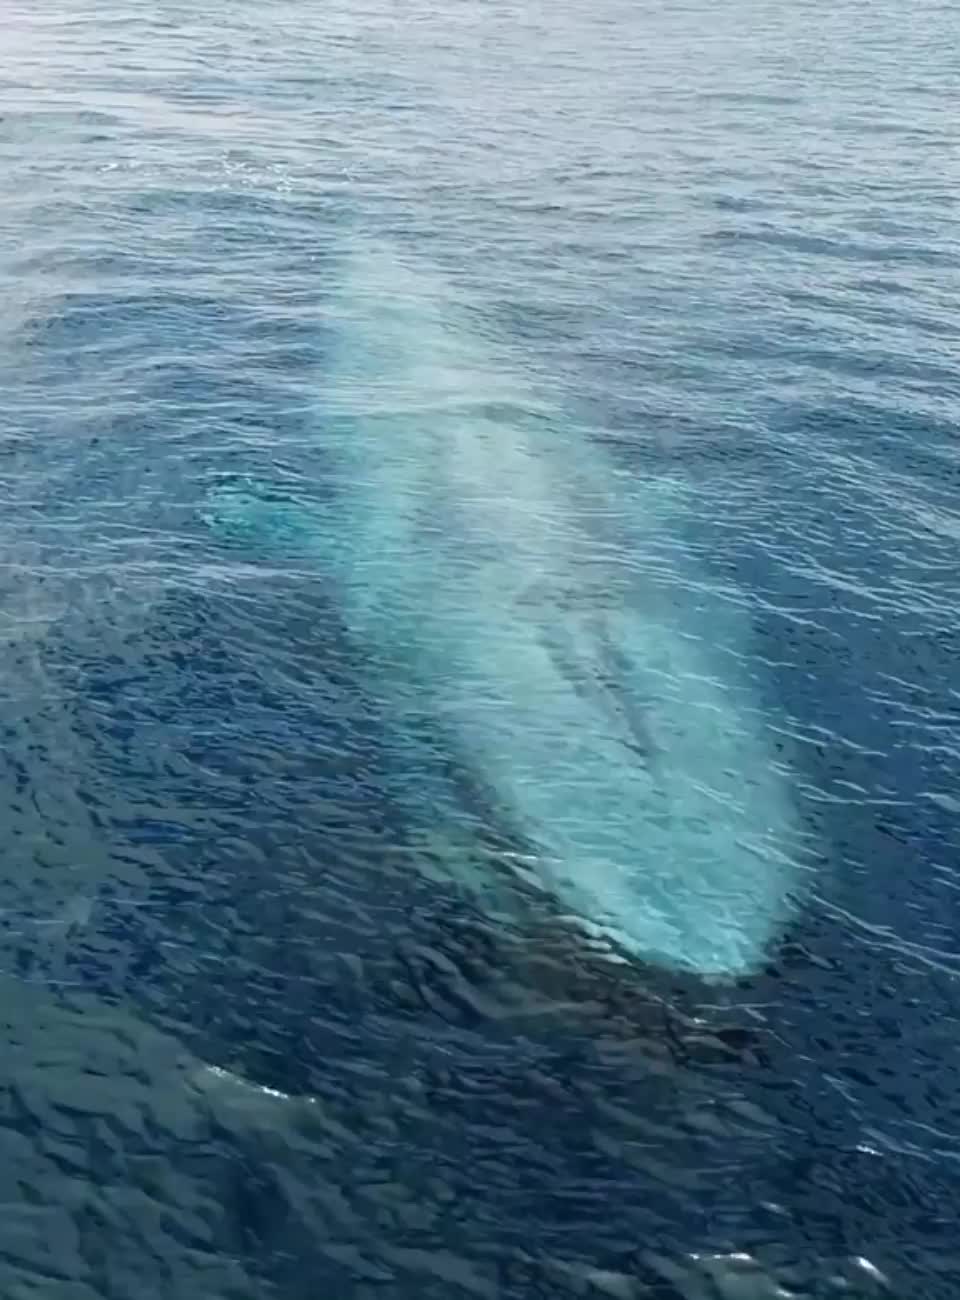 A whale blow hole